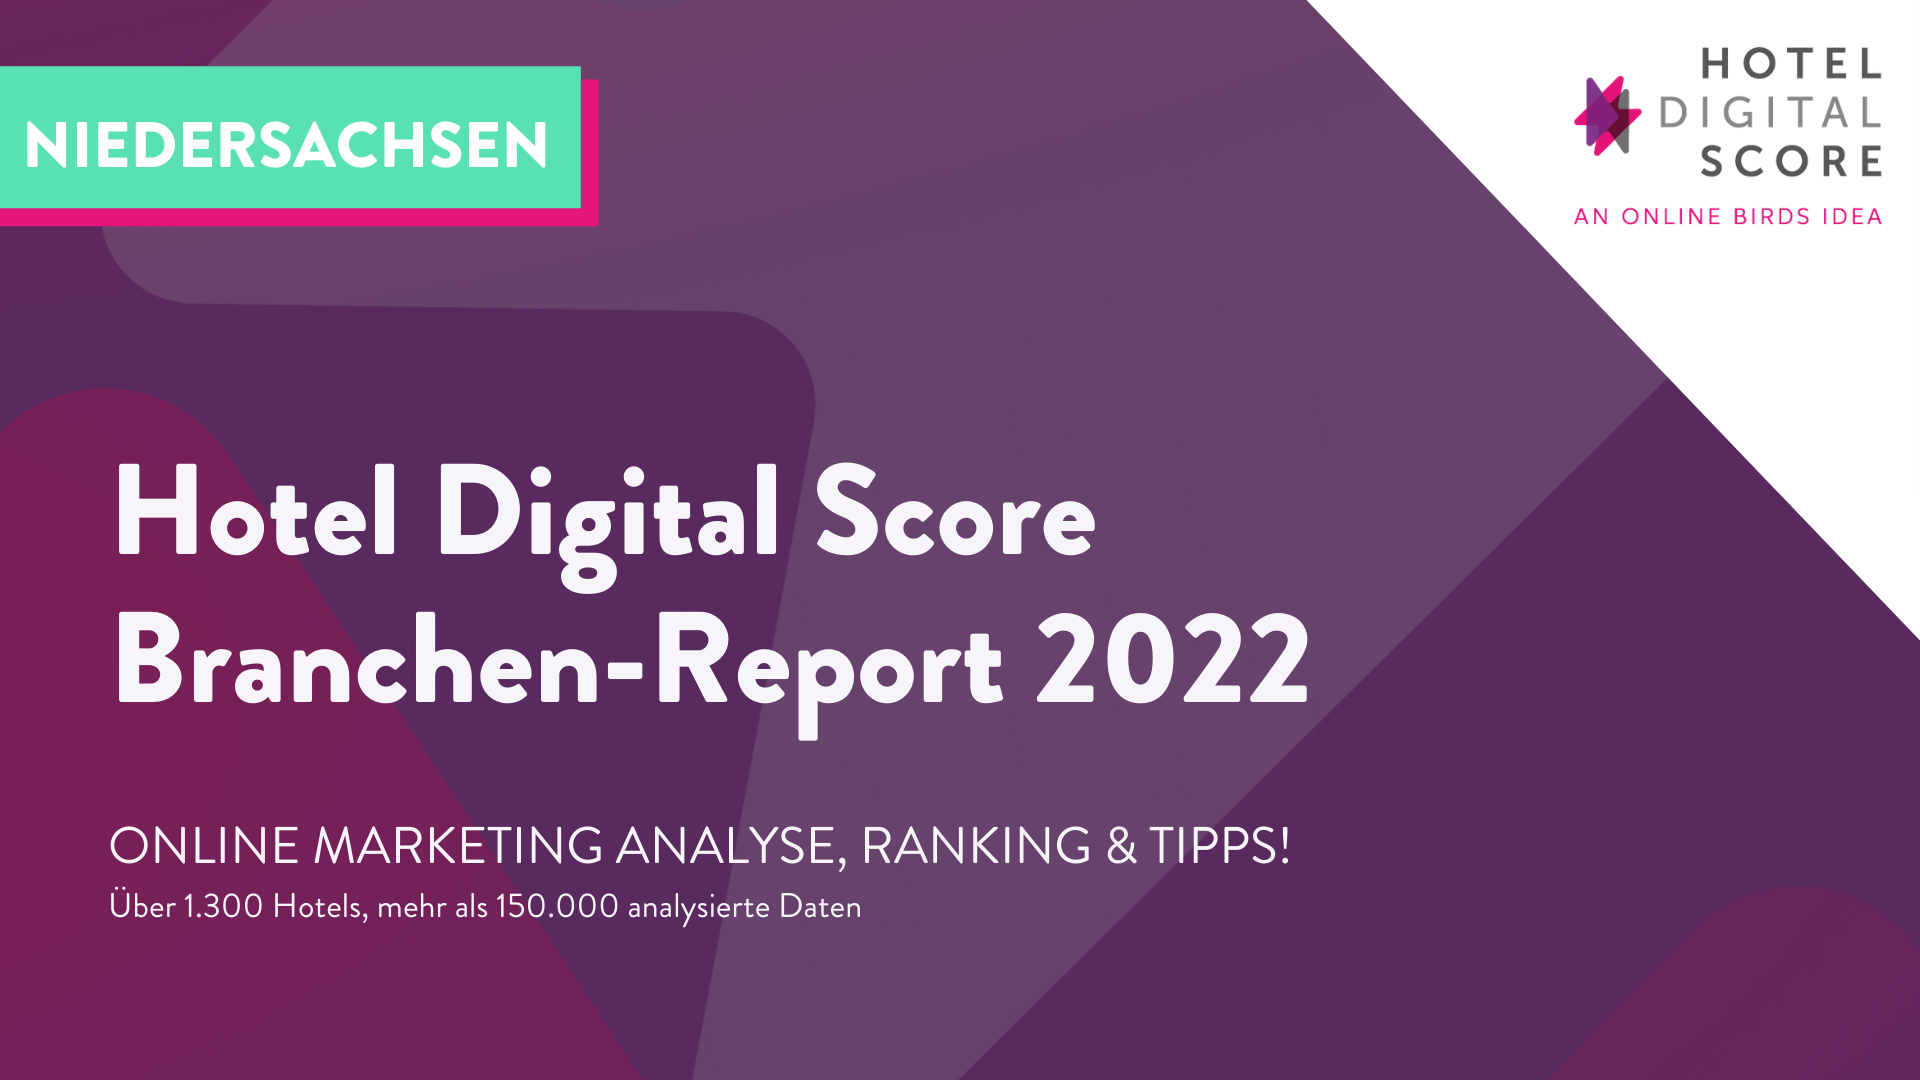 Hotel Digital Score Branchen-Report Niedersachsen 2022